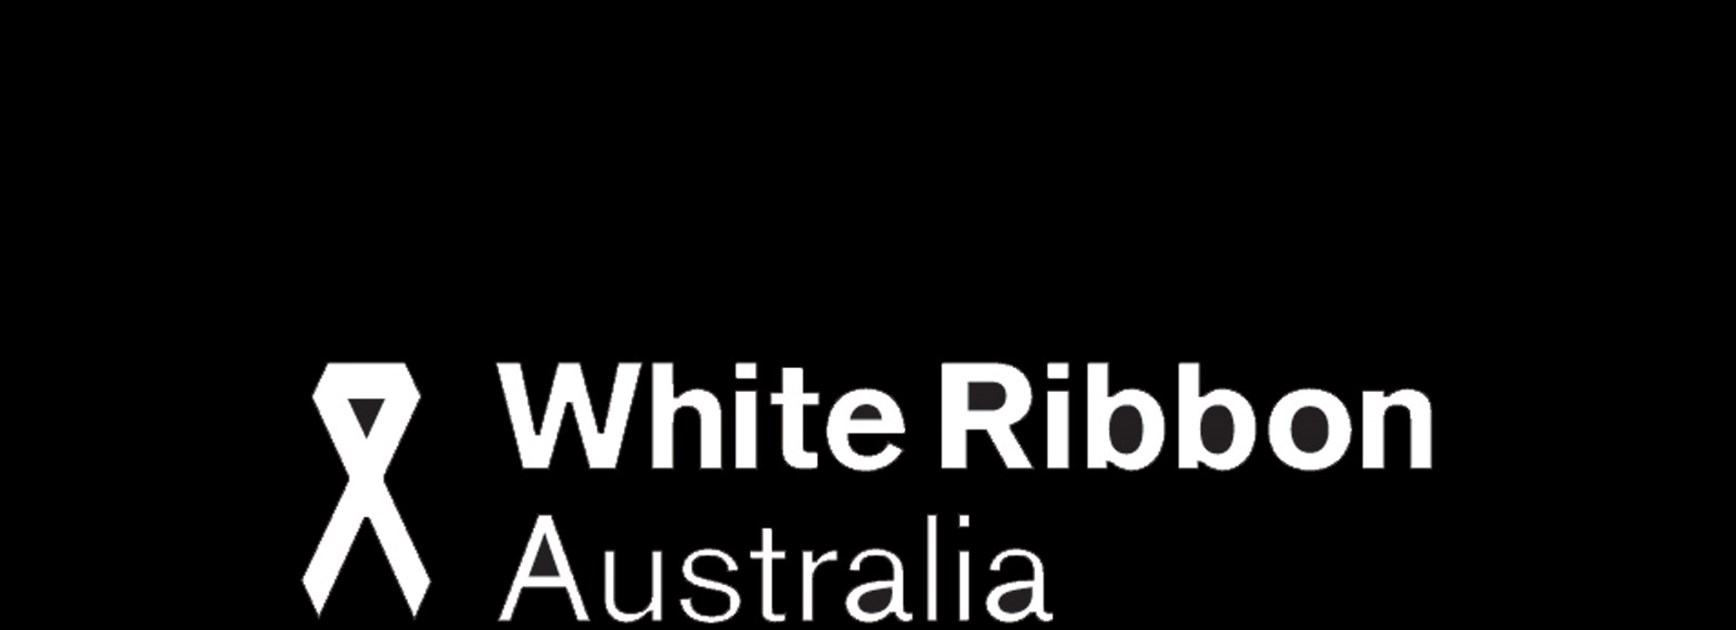 White Ribbon Day: Australia's campaign to prevent men's violence against women.